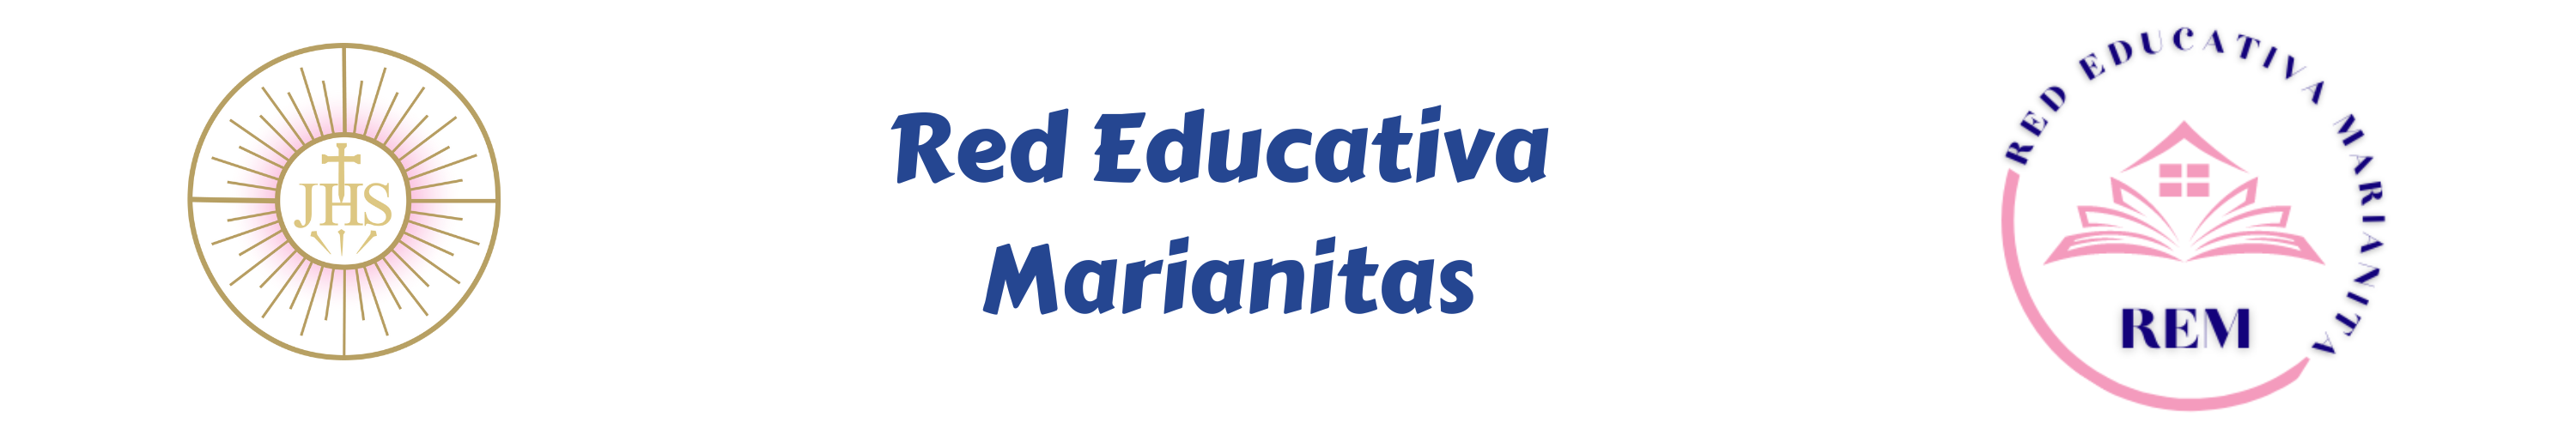 Red Educativa Marianitas logo